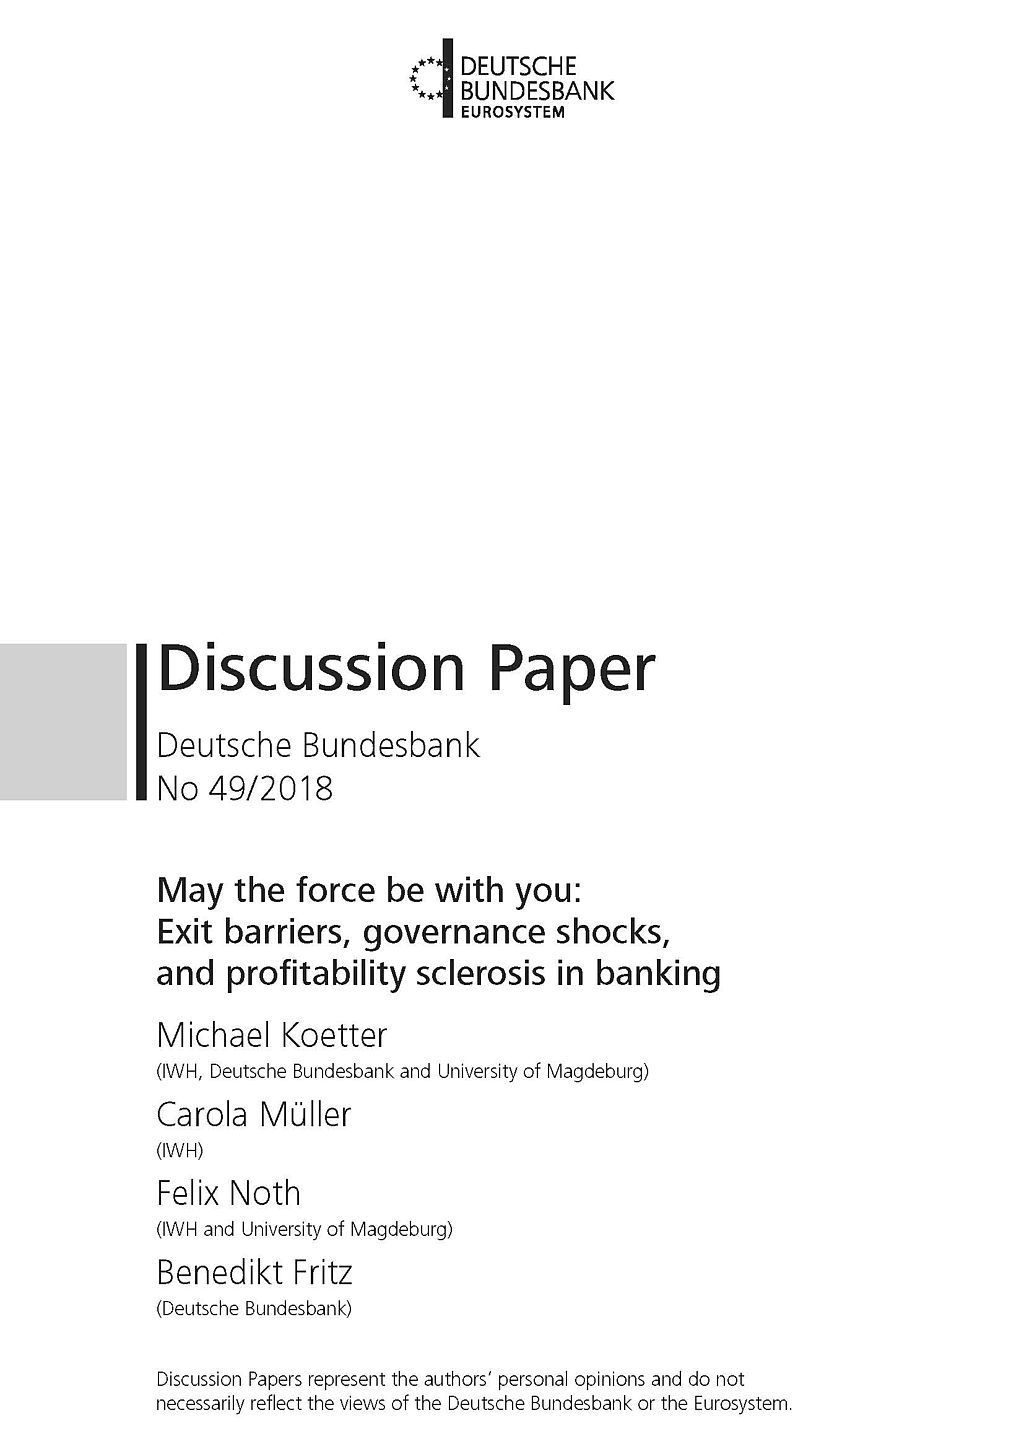 cover_Deutsche-Bundesbank-Discussion-Paper_2018-49.jpg